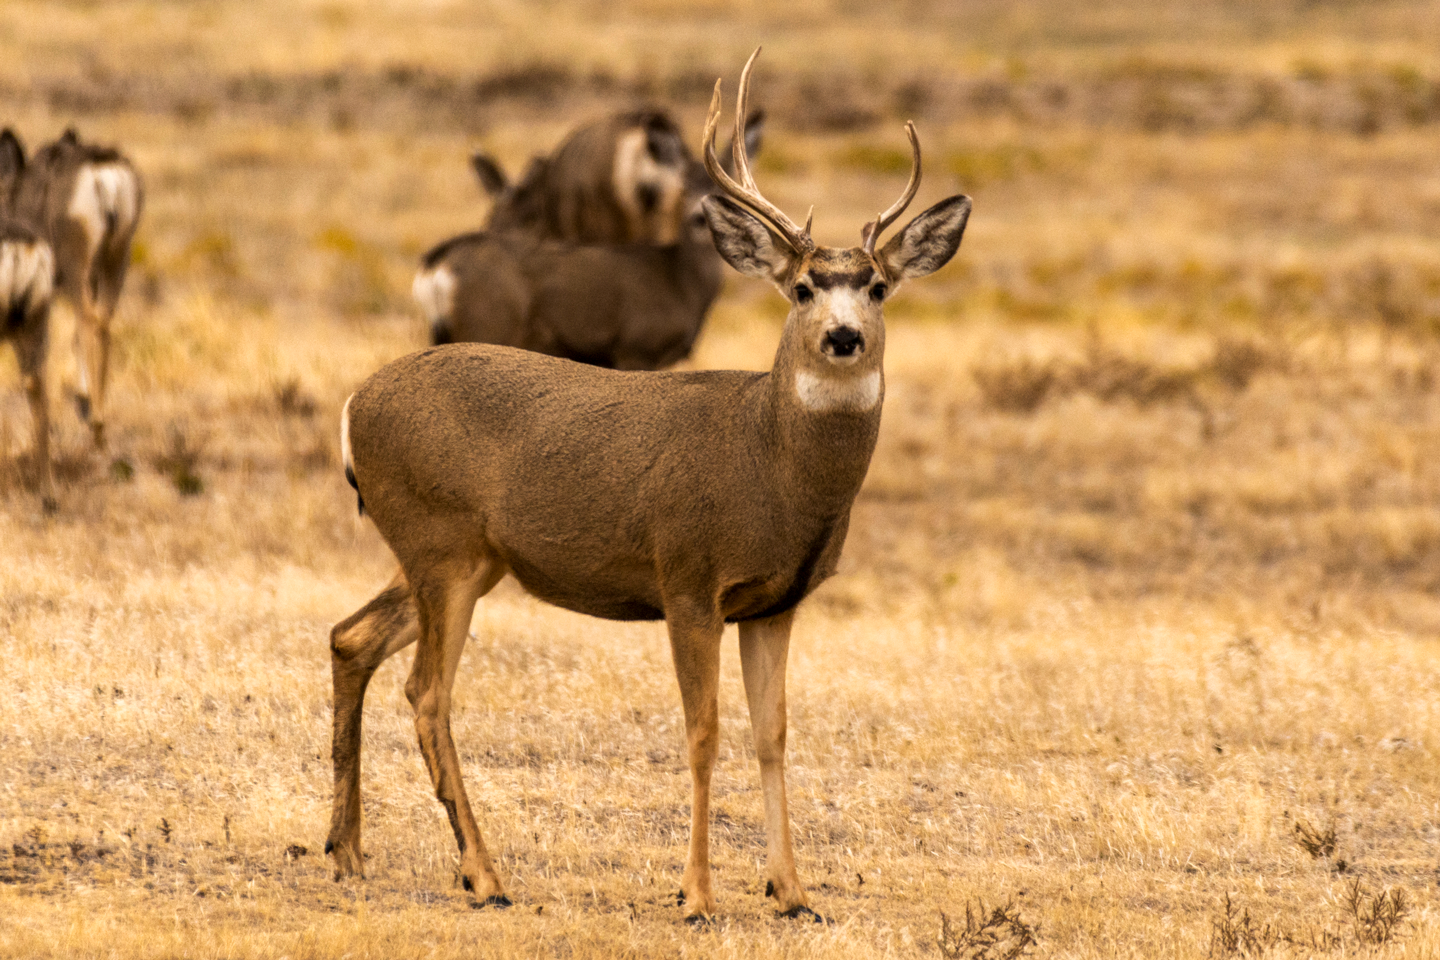 Read More: Deer Hunter Survey